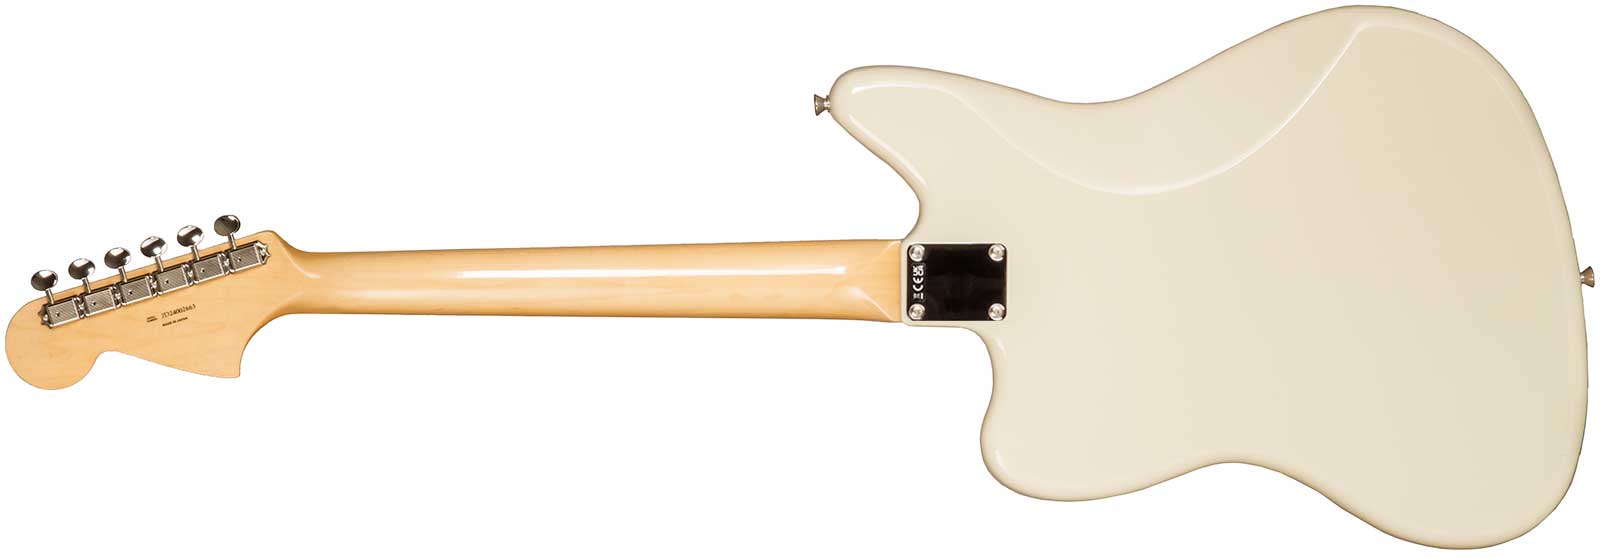 Fender Jaguar Traditional Ii 60s Japan 2s Trem Rw - Olympic White - Retro-rock elektrische gitaar - Variation 4